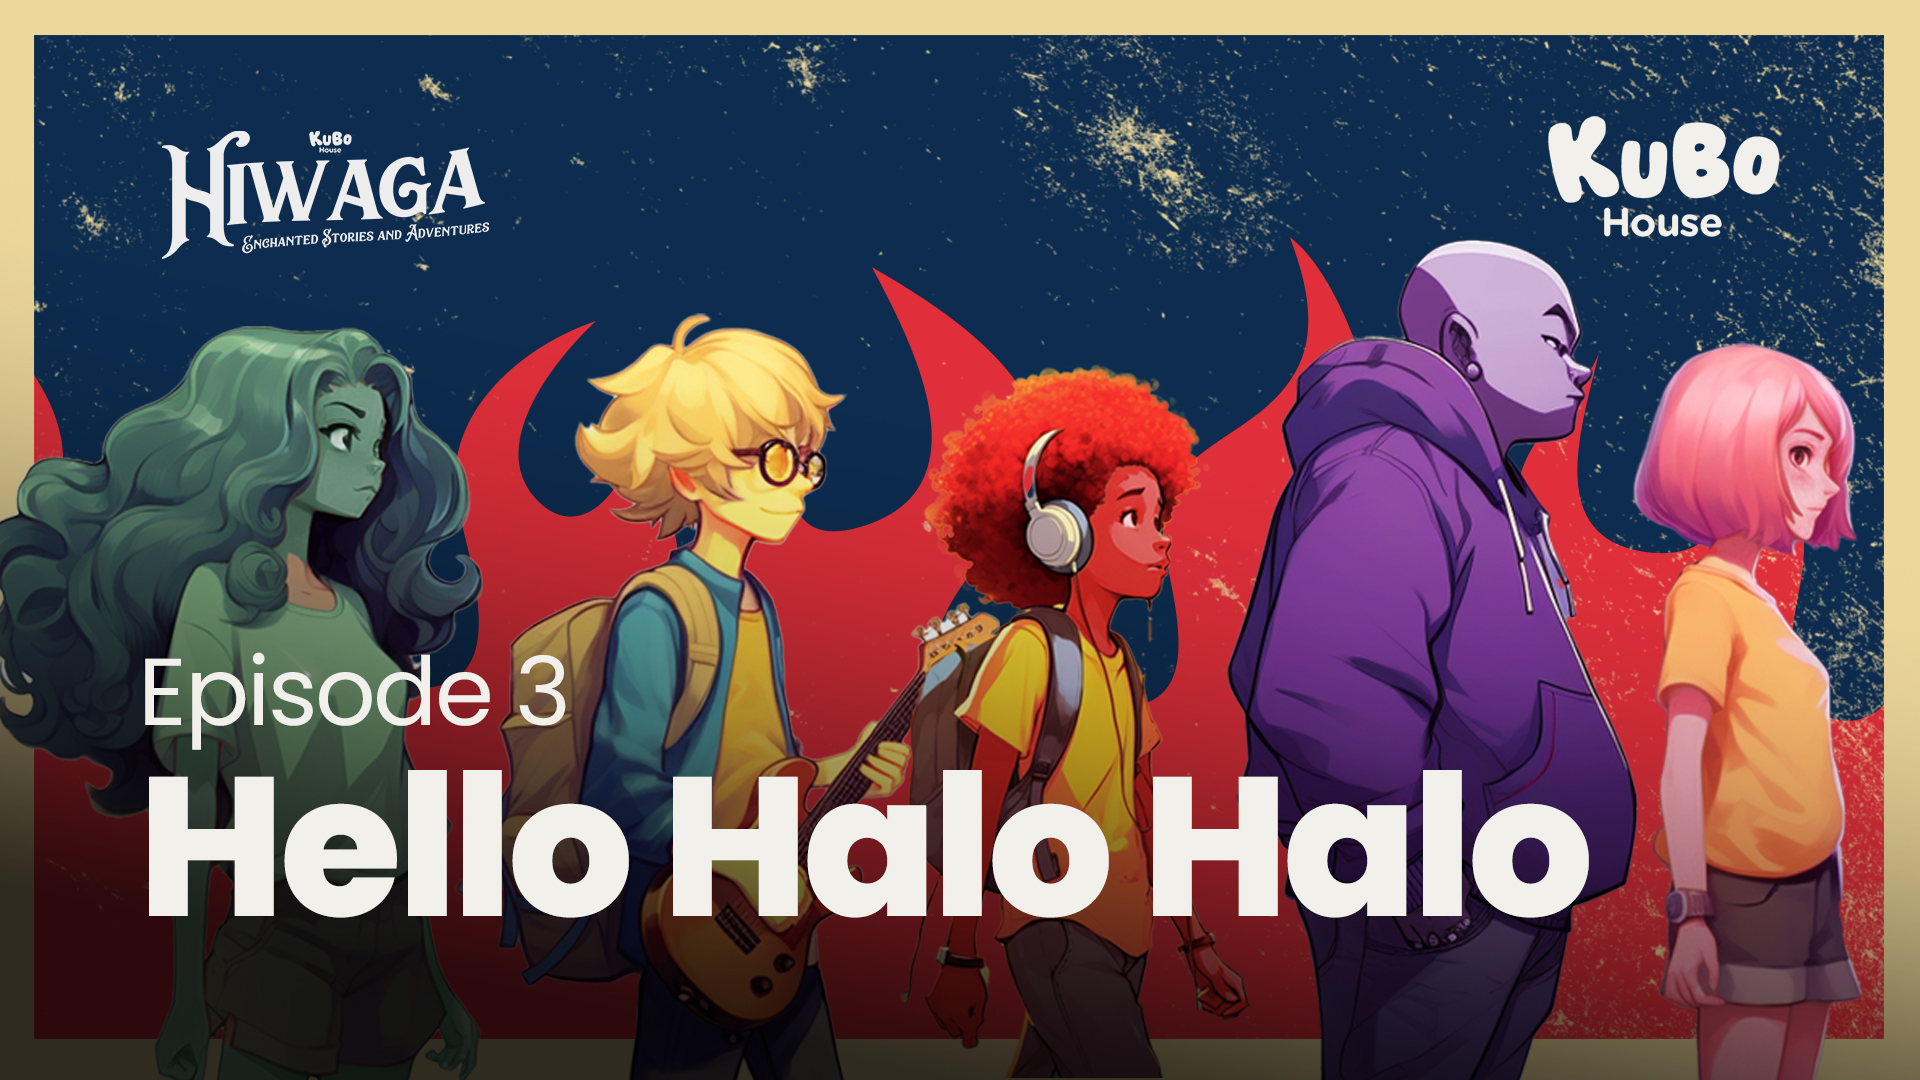 Hiwaga: Enchanted Stories and Adventures – Episode 3 "Hello Halo Halo"